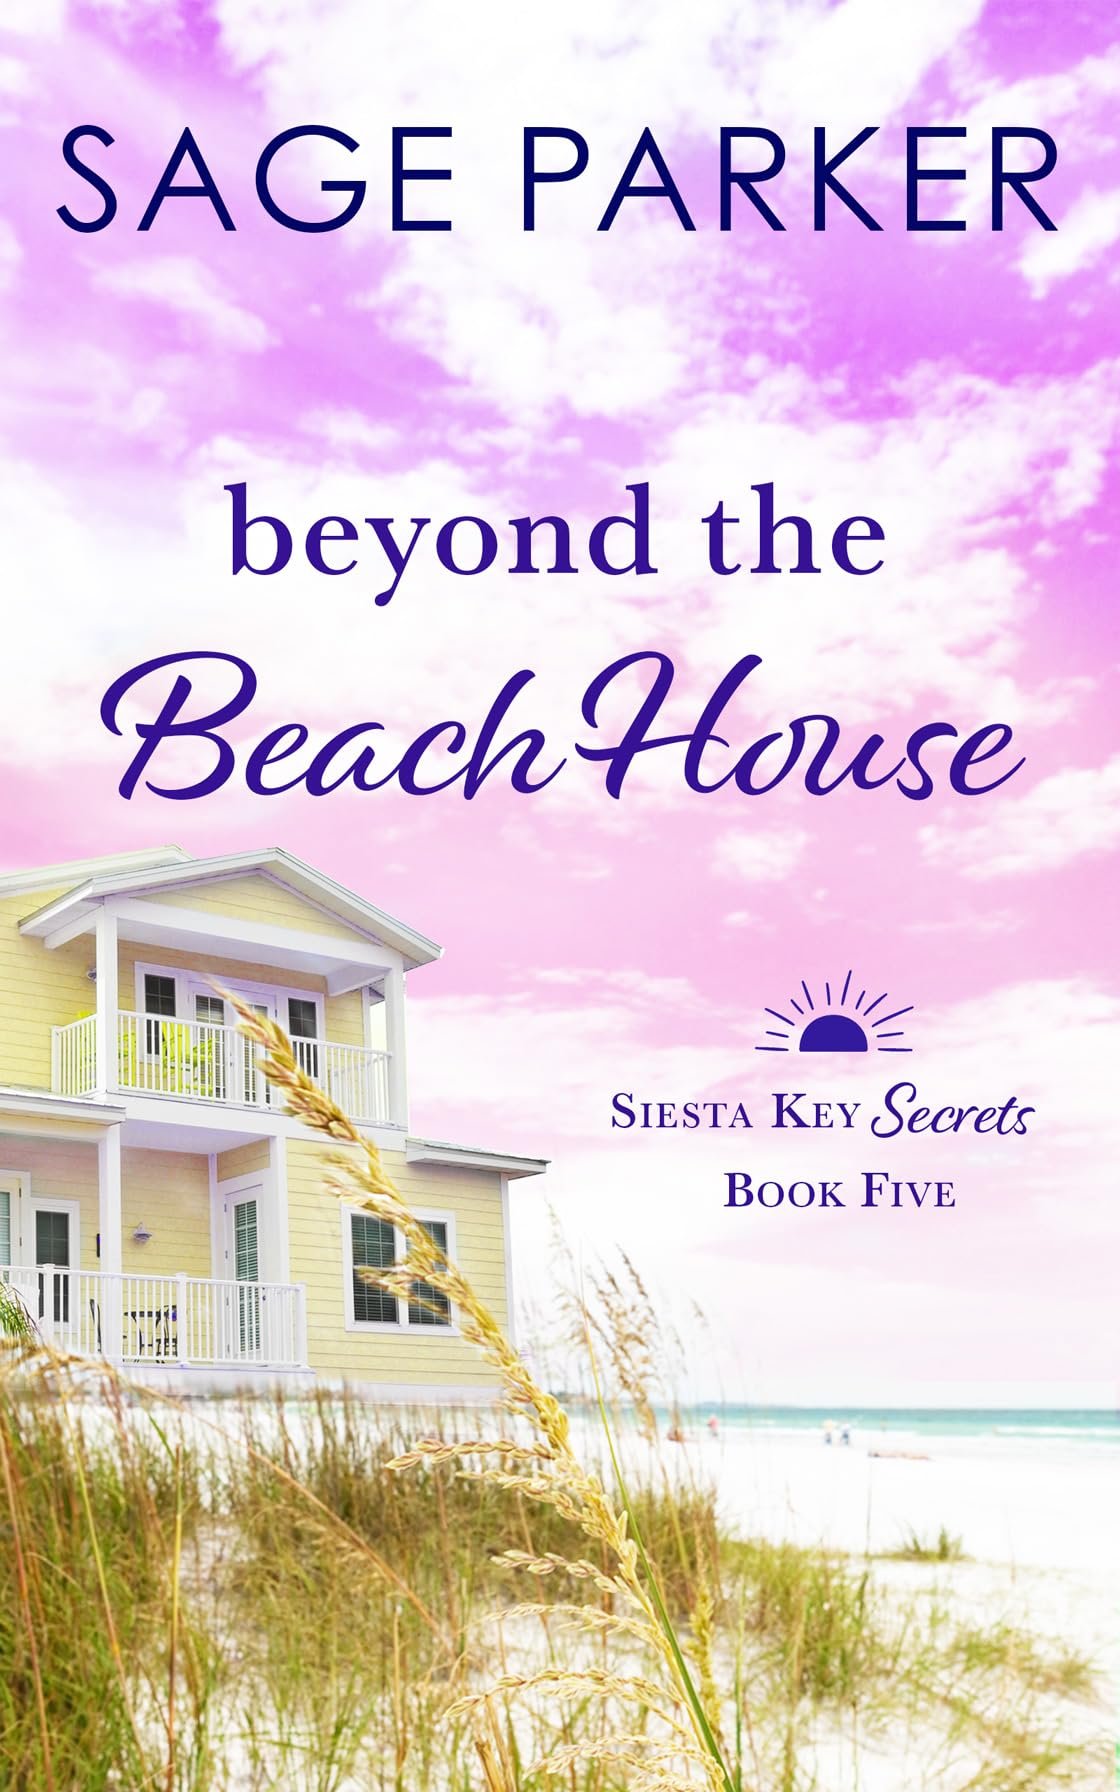 Beyond the Beach House (Siesta Key Secrets Book 5) Cover